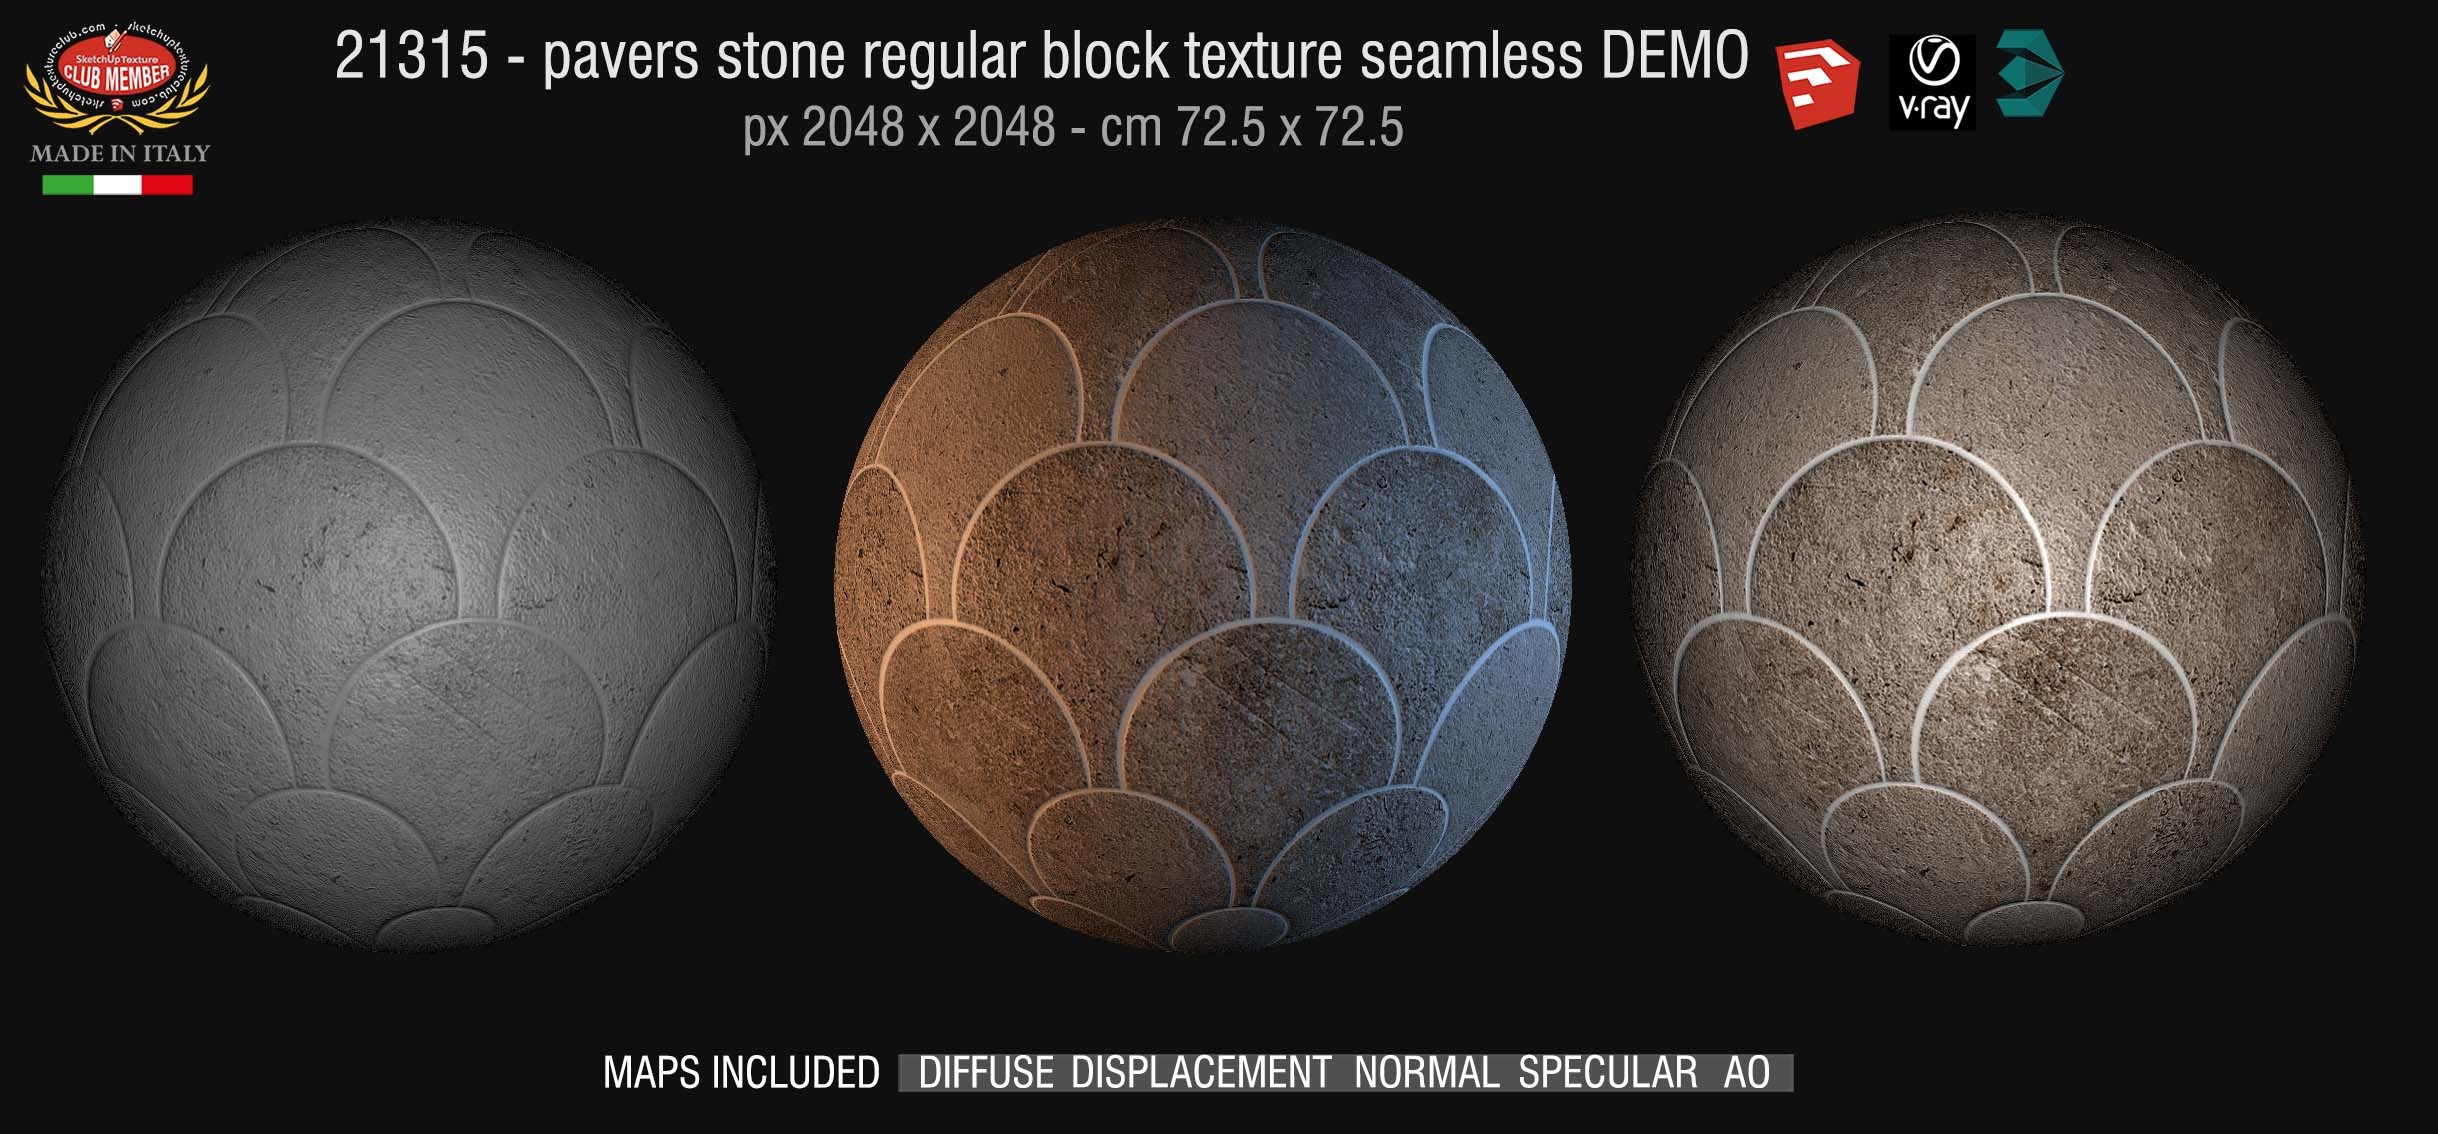 21315 HR Pavers stone regular block texture seamless + maps DEMO